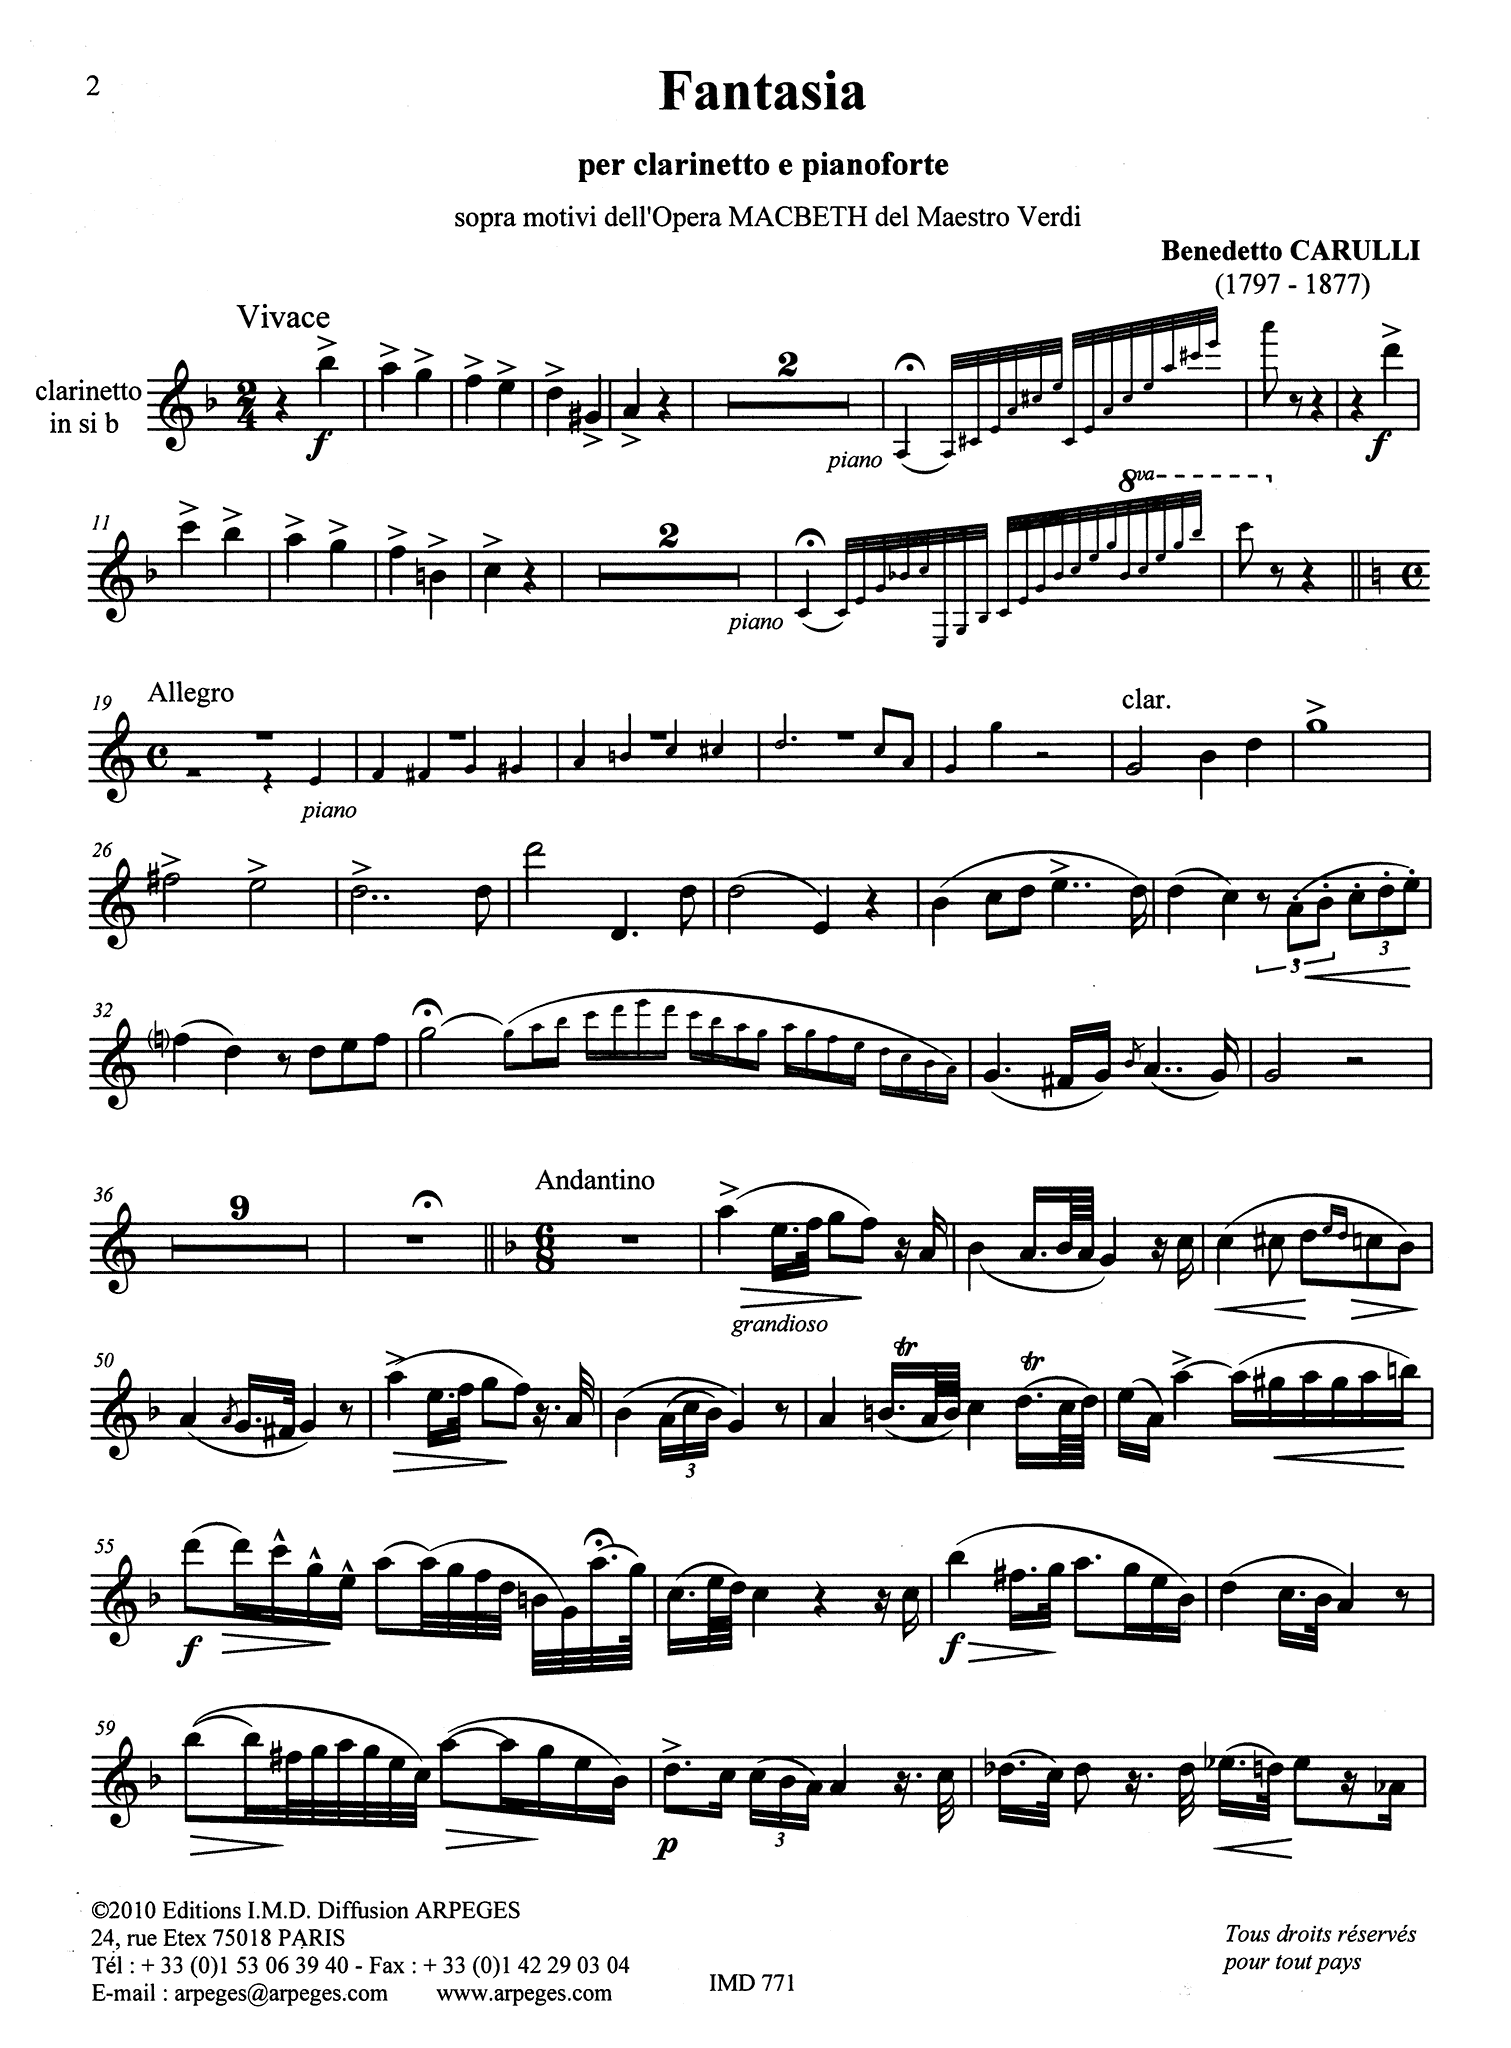 Carulli Fantasia on Verdi opera ‘Macbeth’ clarinet part